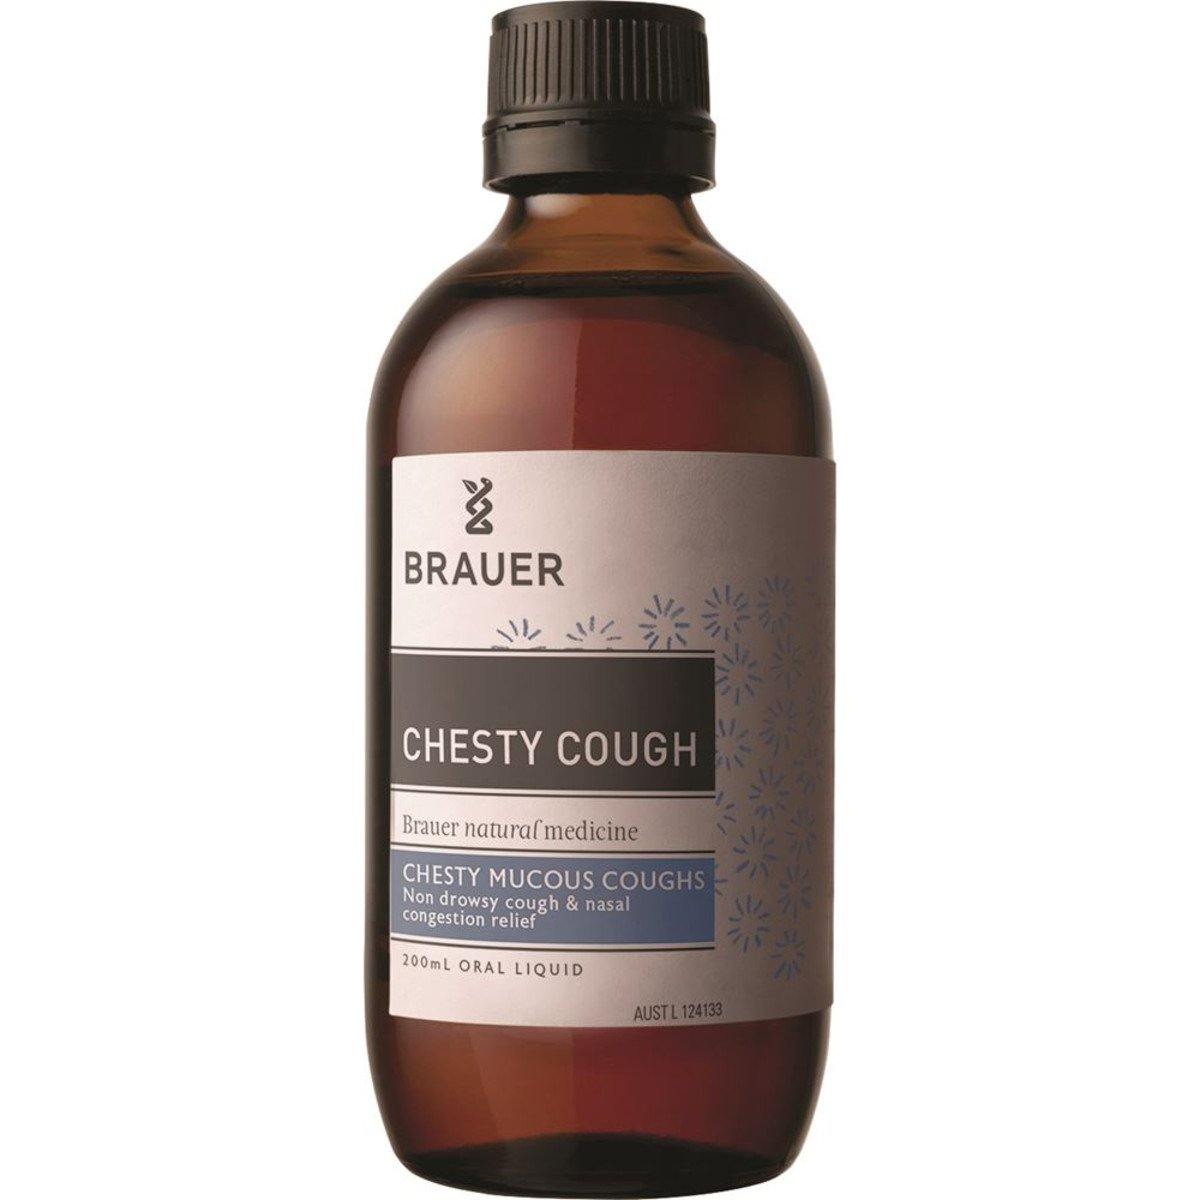 Brauer Chesty Cough 200ml - QVM Vitamins™